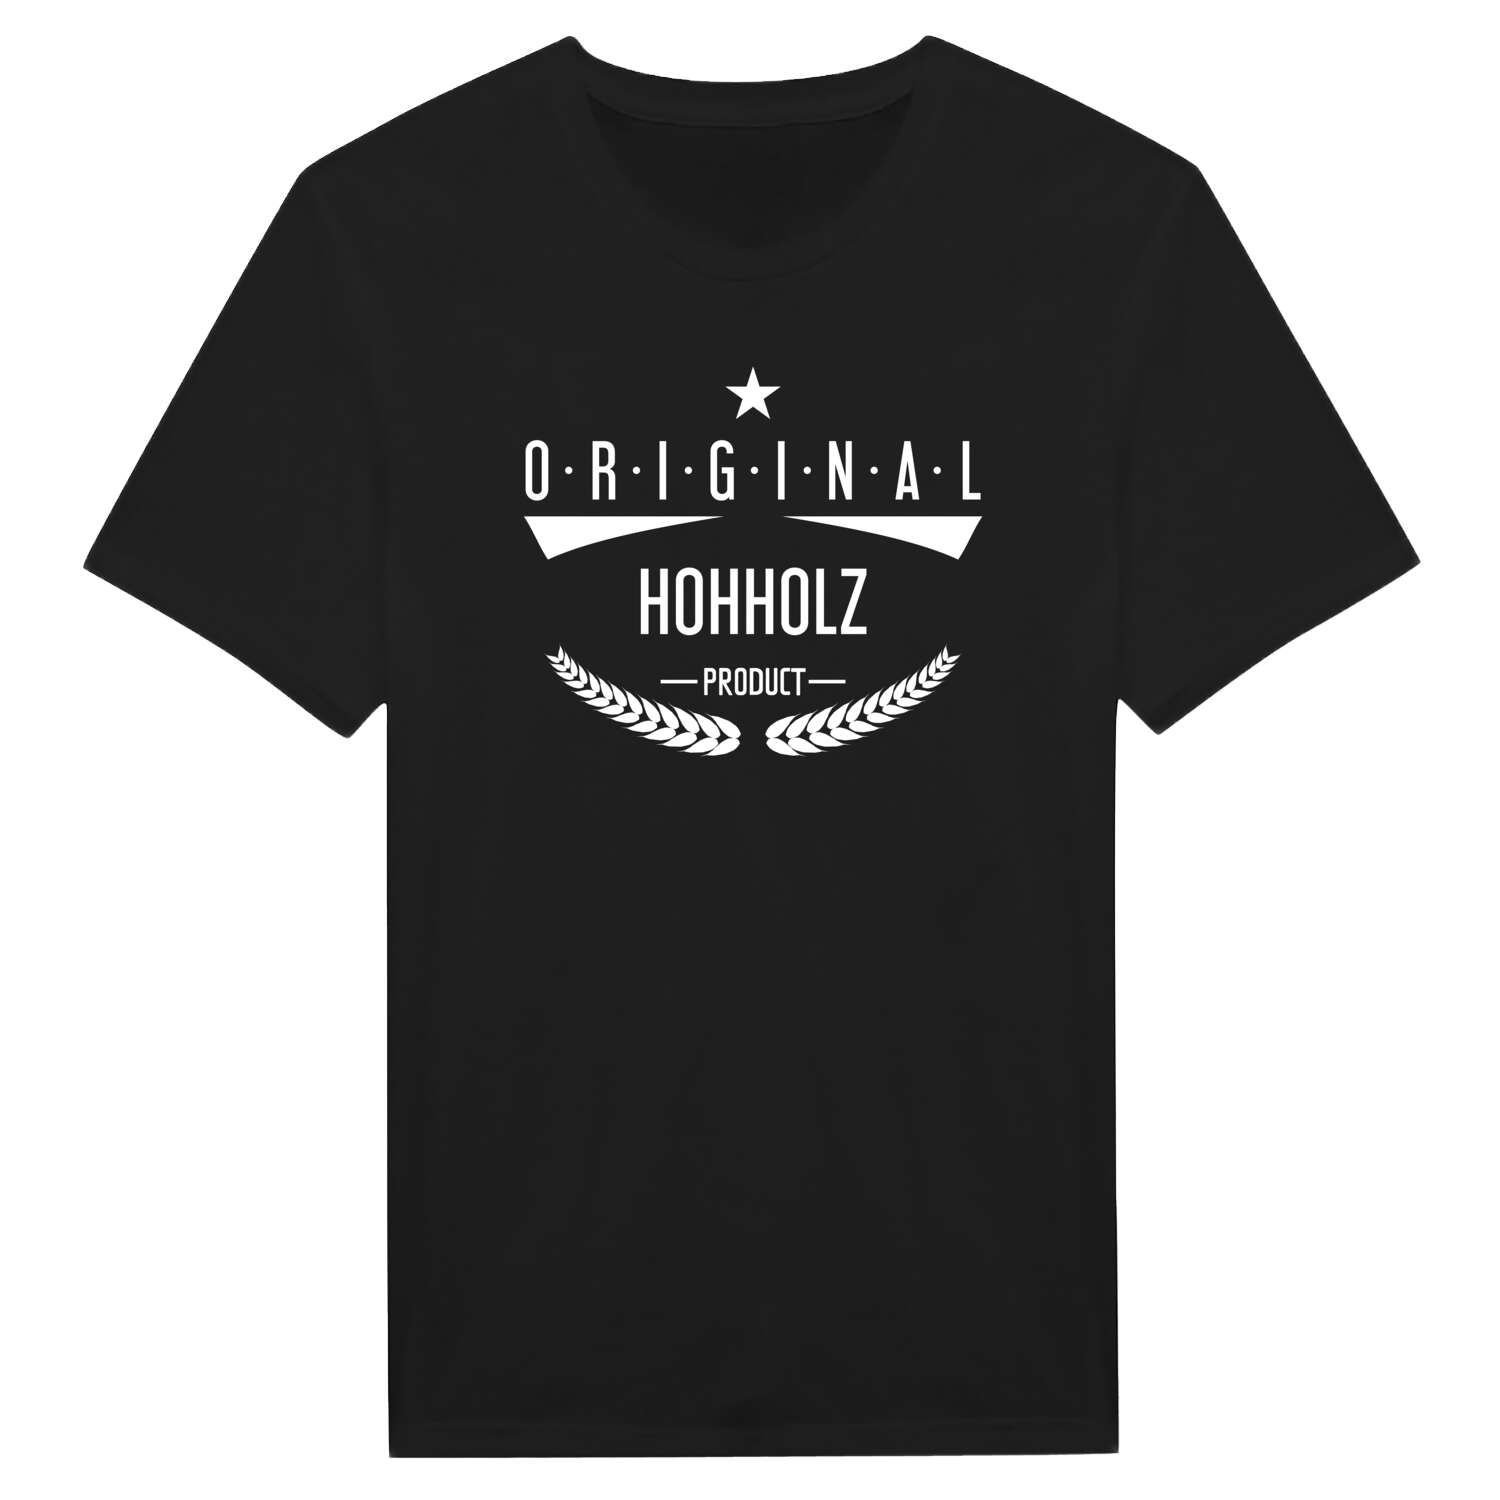 Hohholz T-Shirt »Original Product«